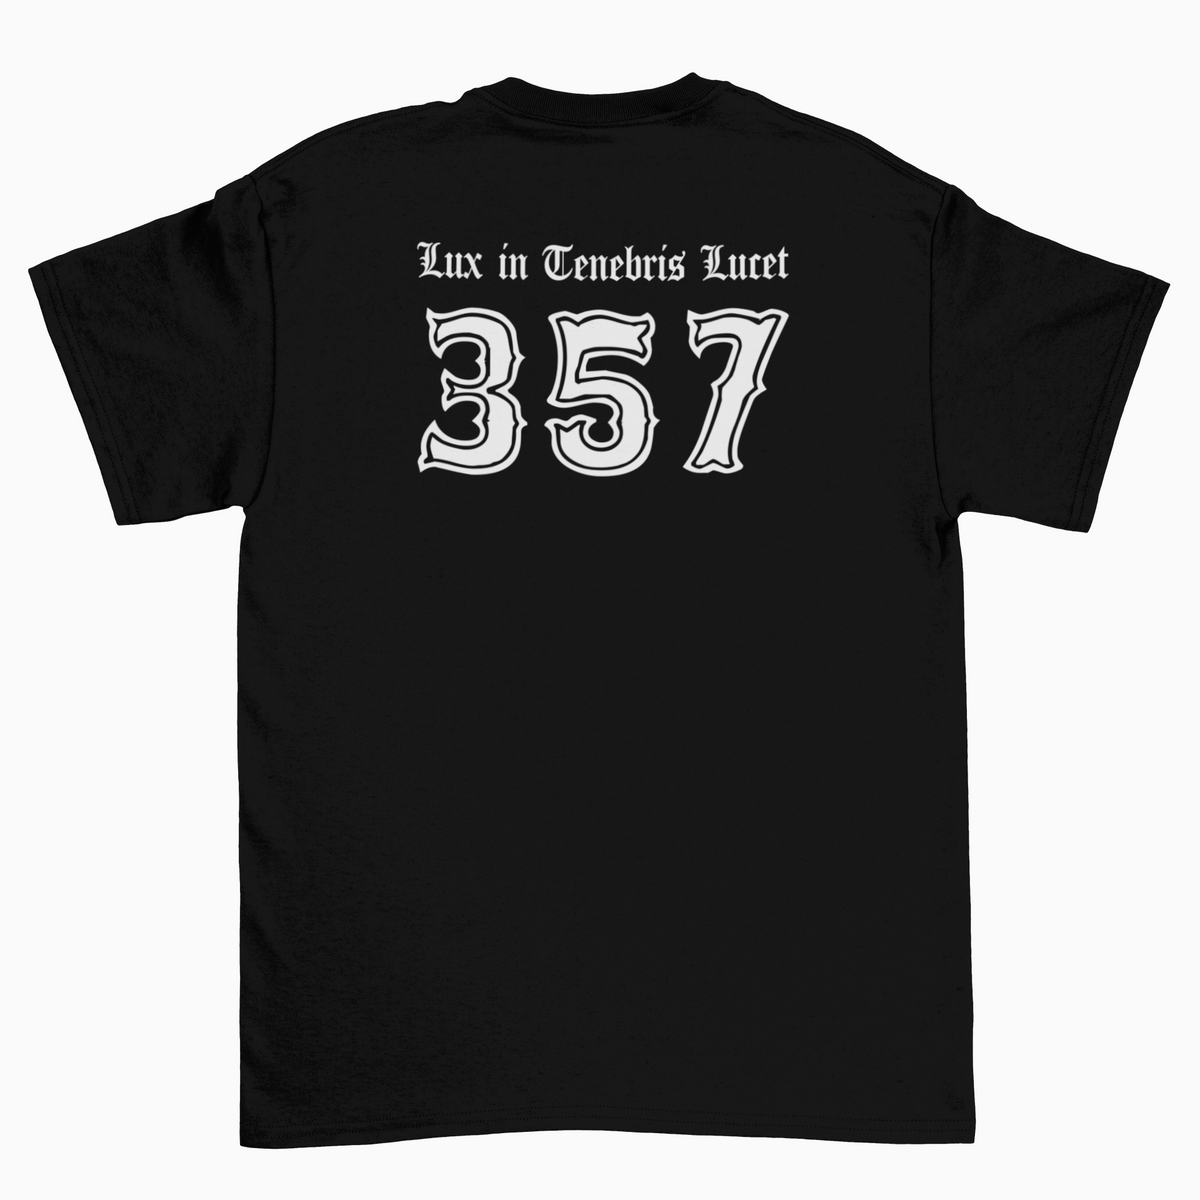 raised-in-the-7th-district-t-shirt-masonic-printz-masonicprintz